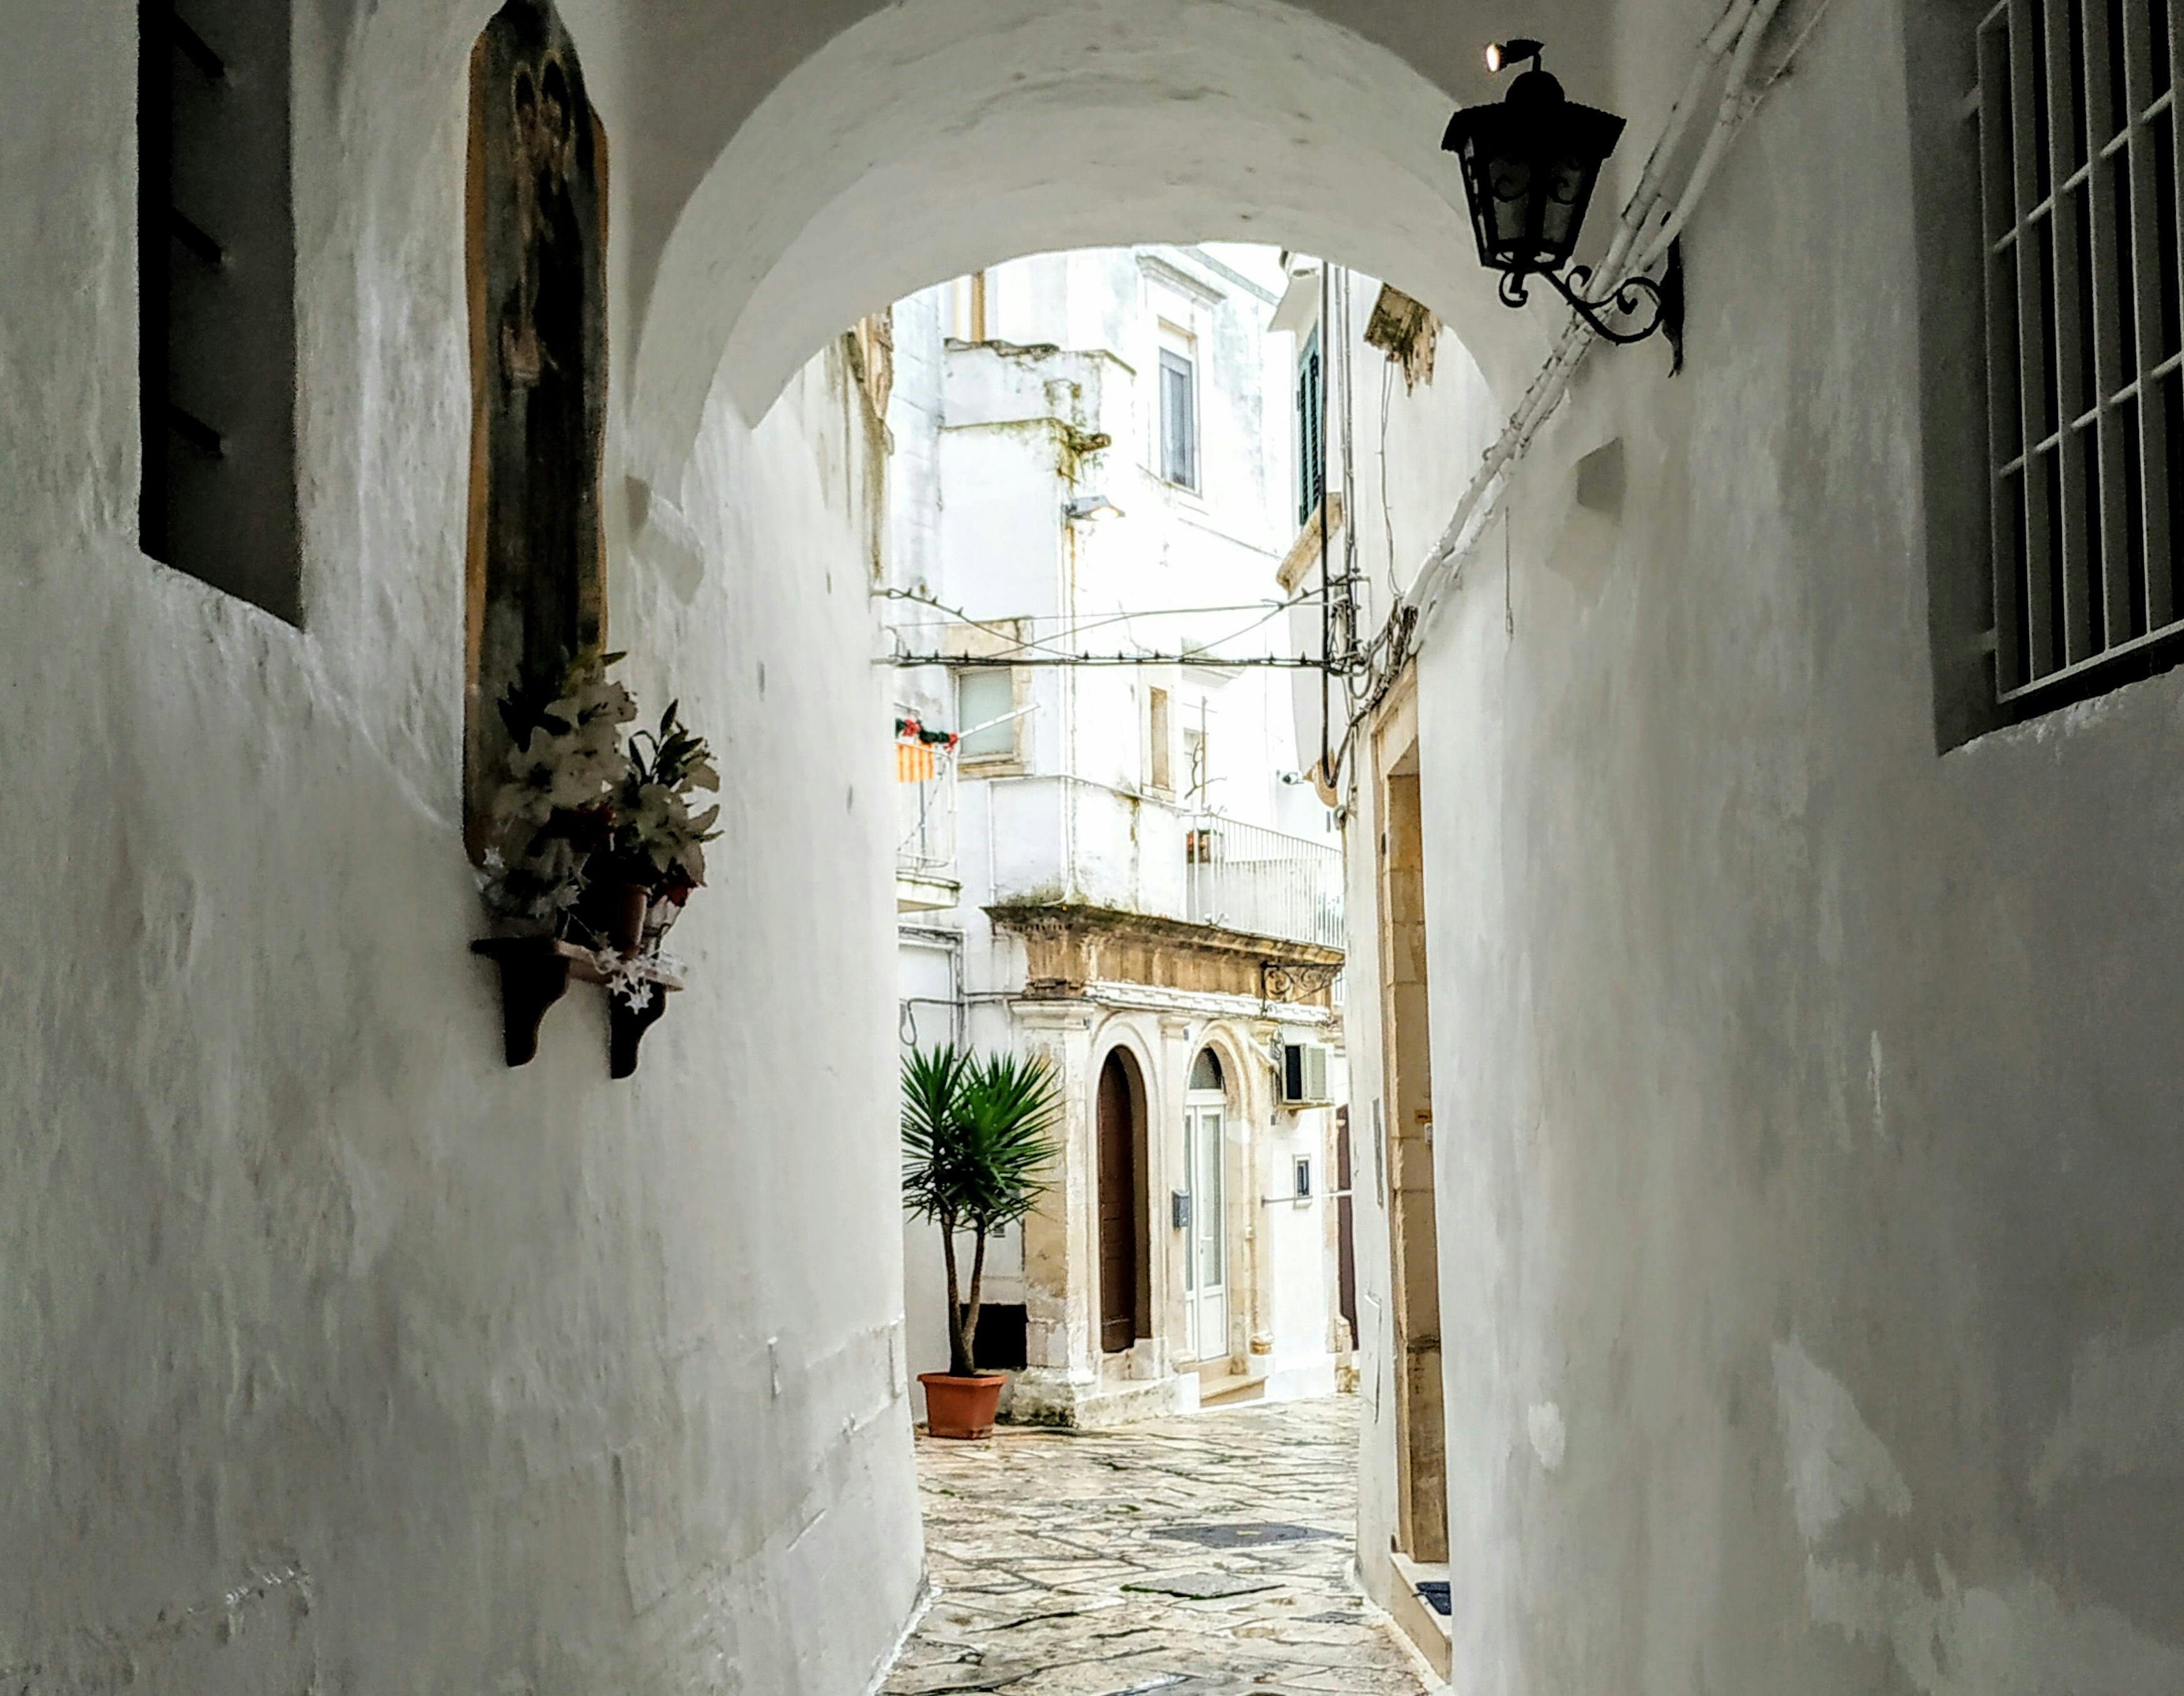 Martina Franca, Alberobello & Tastes from North Ionian Coast